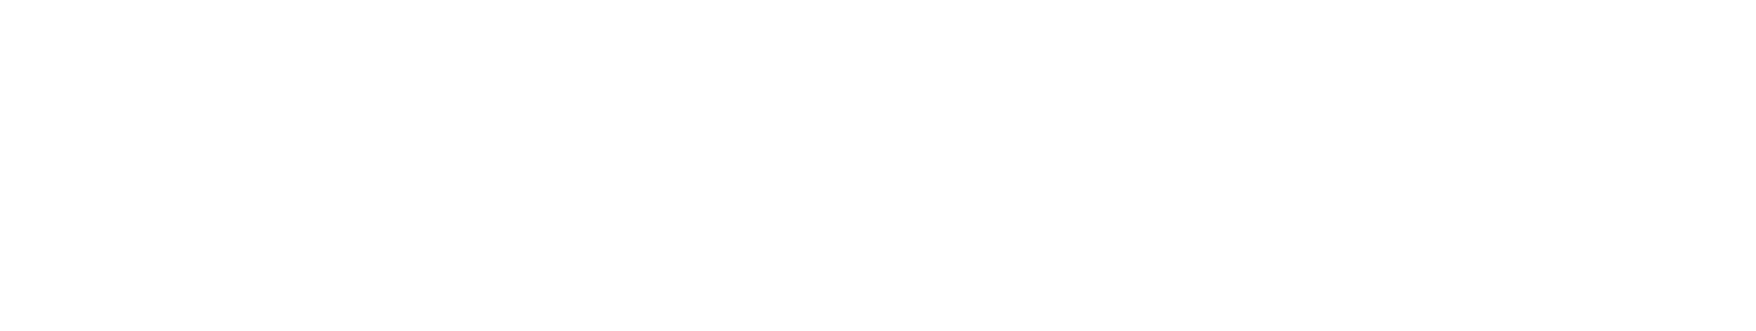 Pharmacists Mutual logo